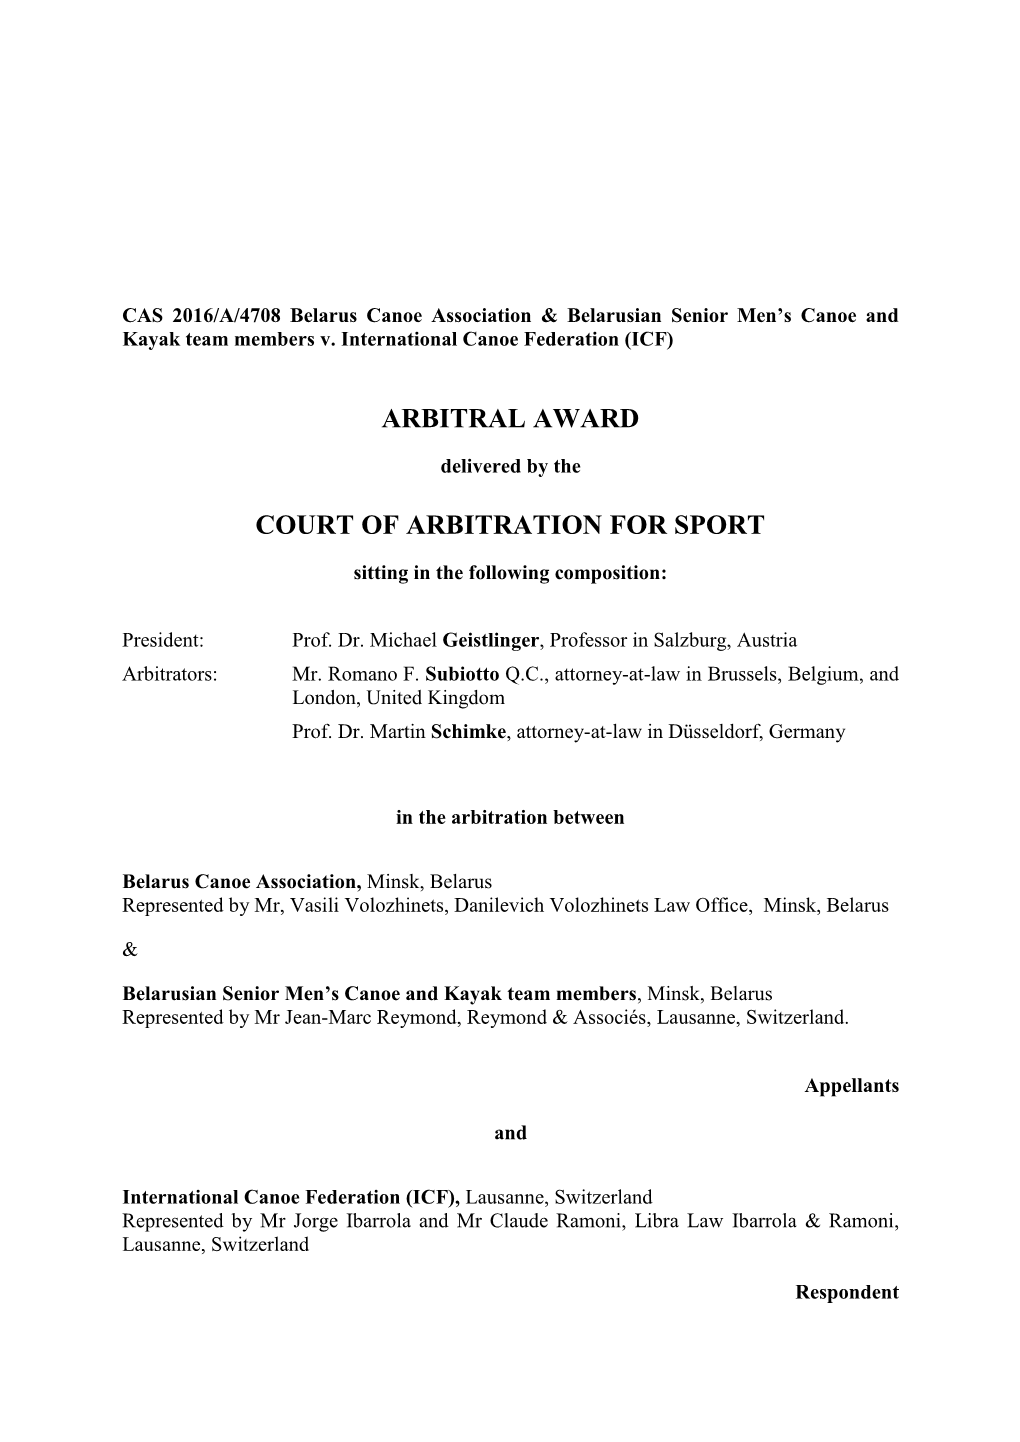 Arbitral Award Court of Arbitration for Sport